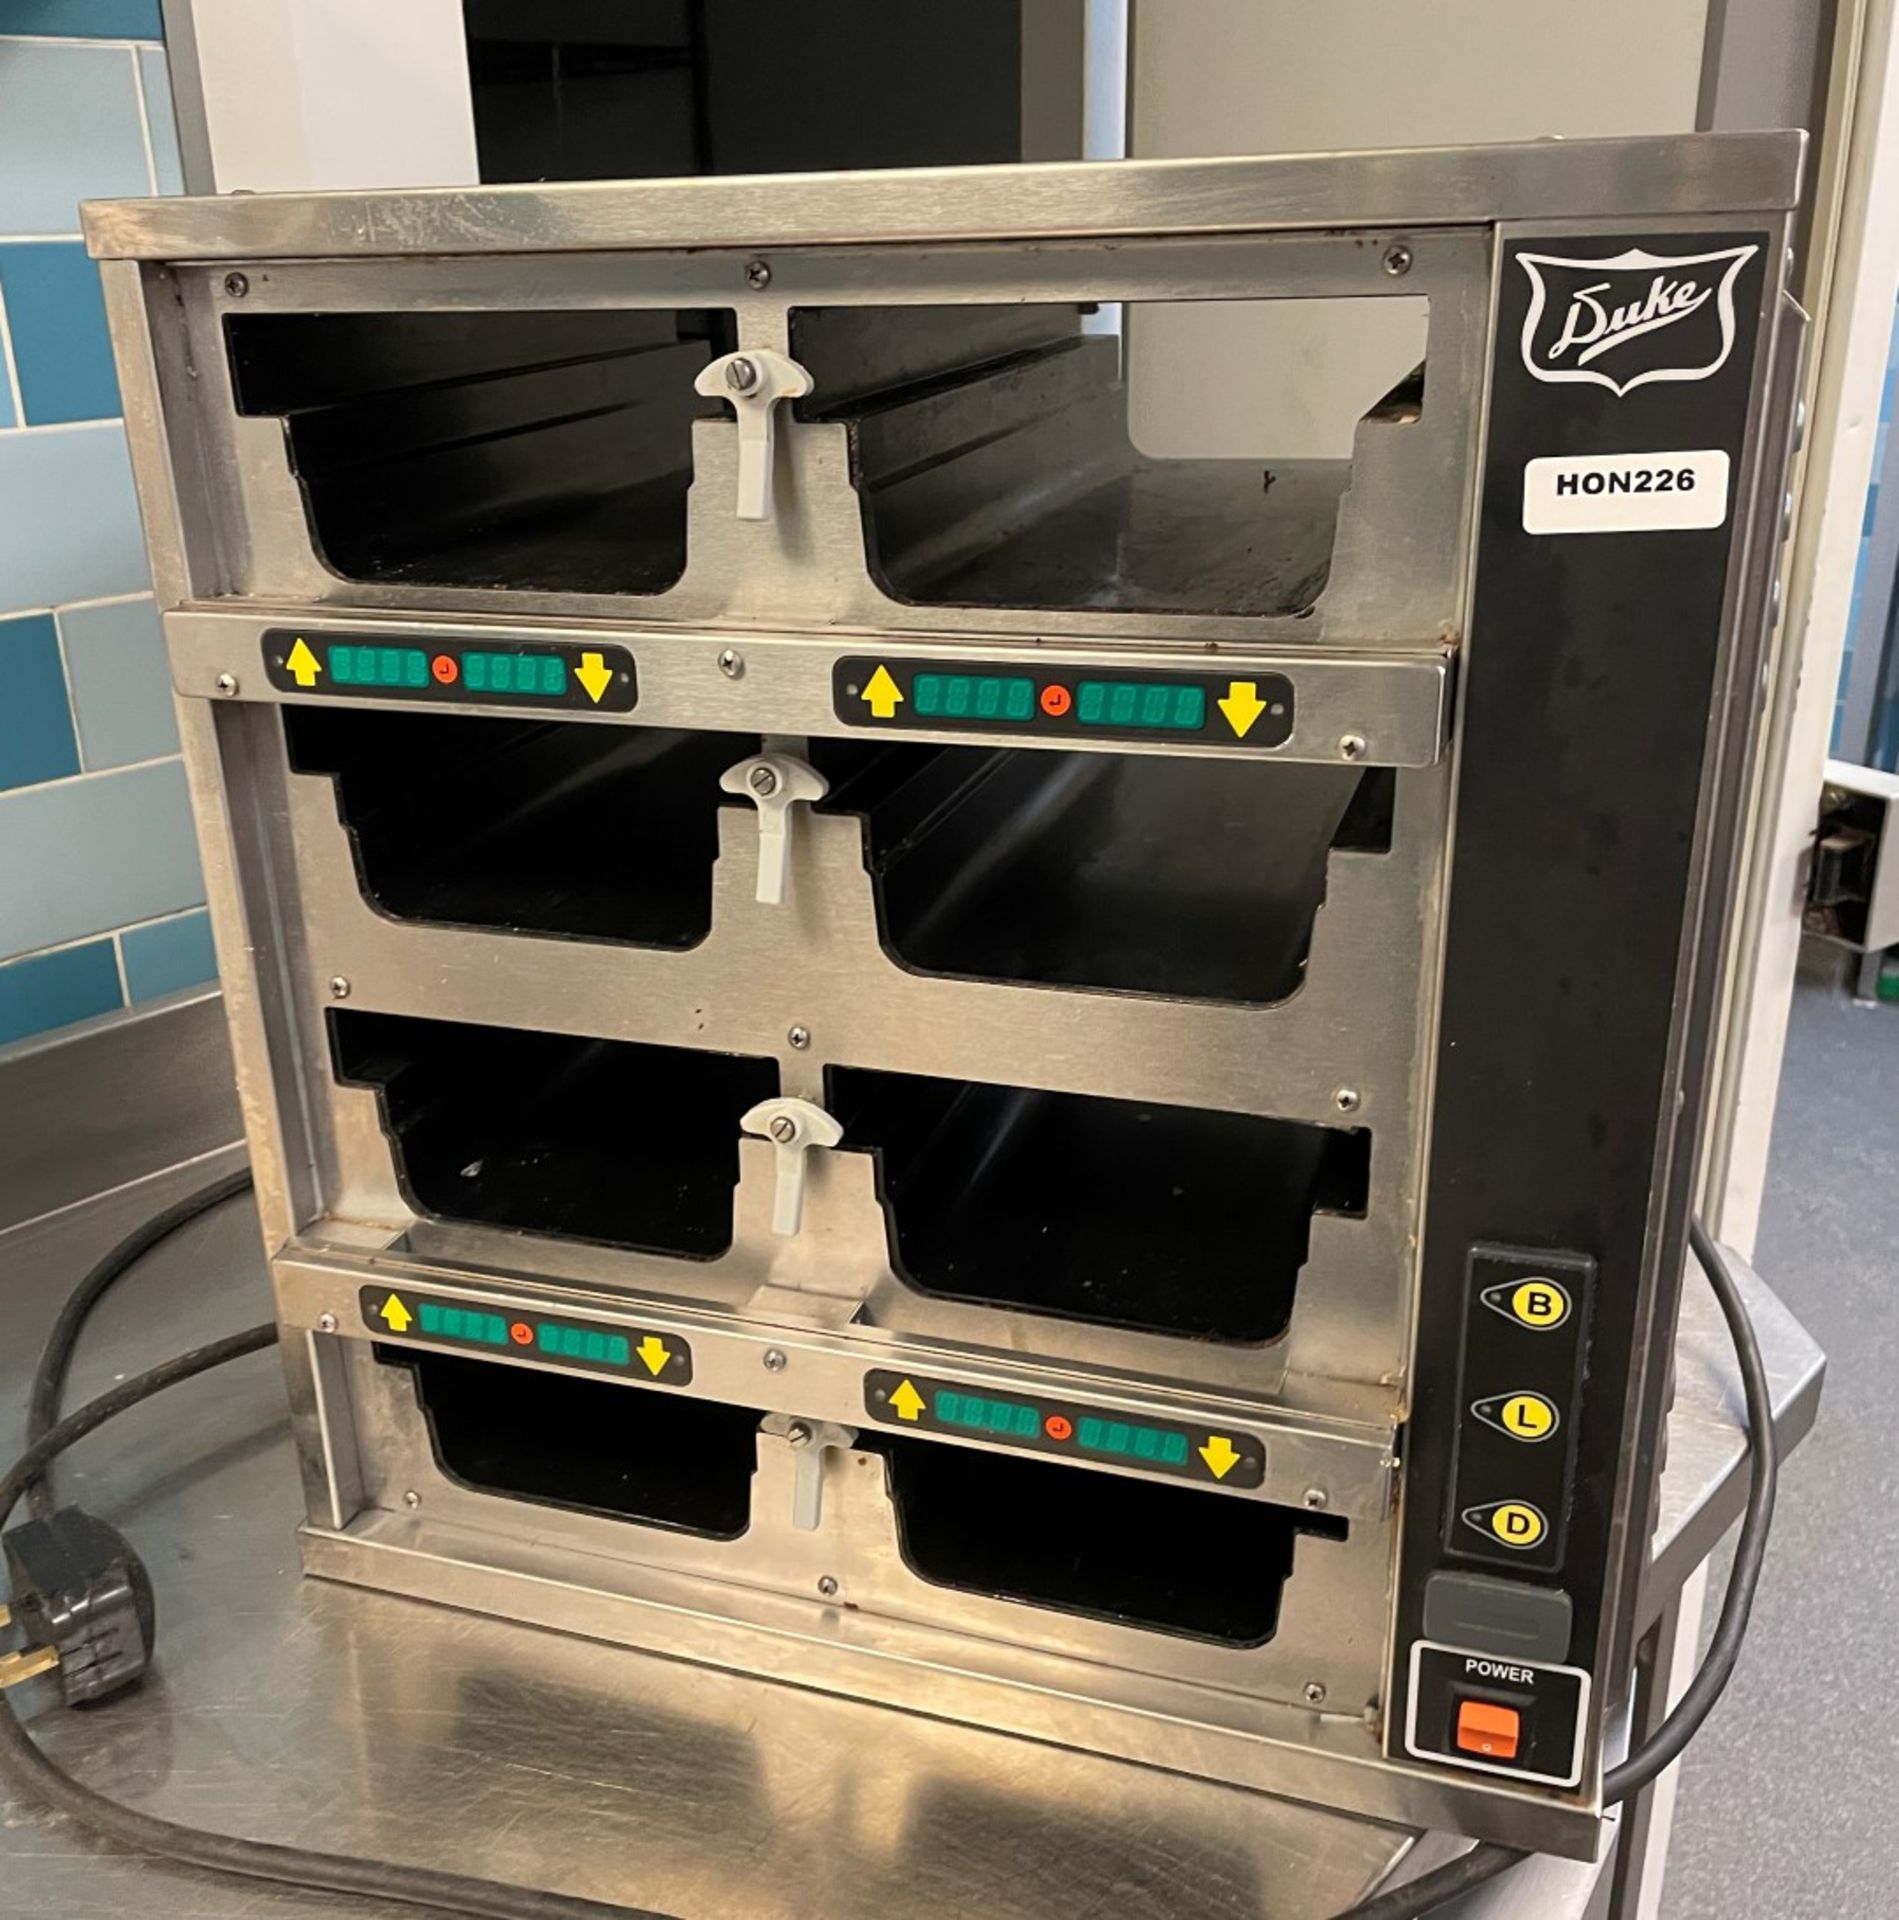 1 x Duke FWM Food Warming Holding Cabinet With HeatSinnk Technology - Model FWM3-42PR6-230 - Image 4 of 11